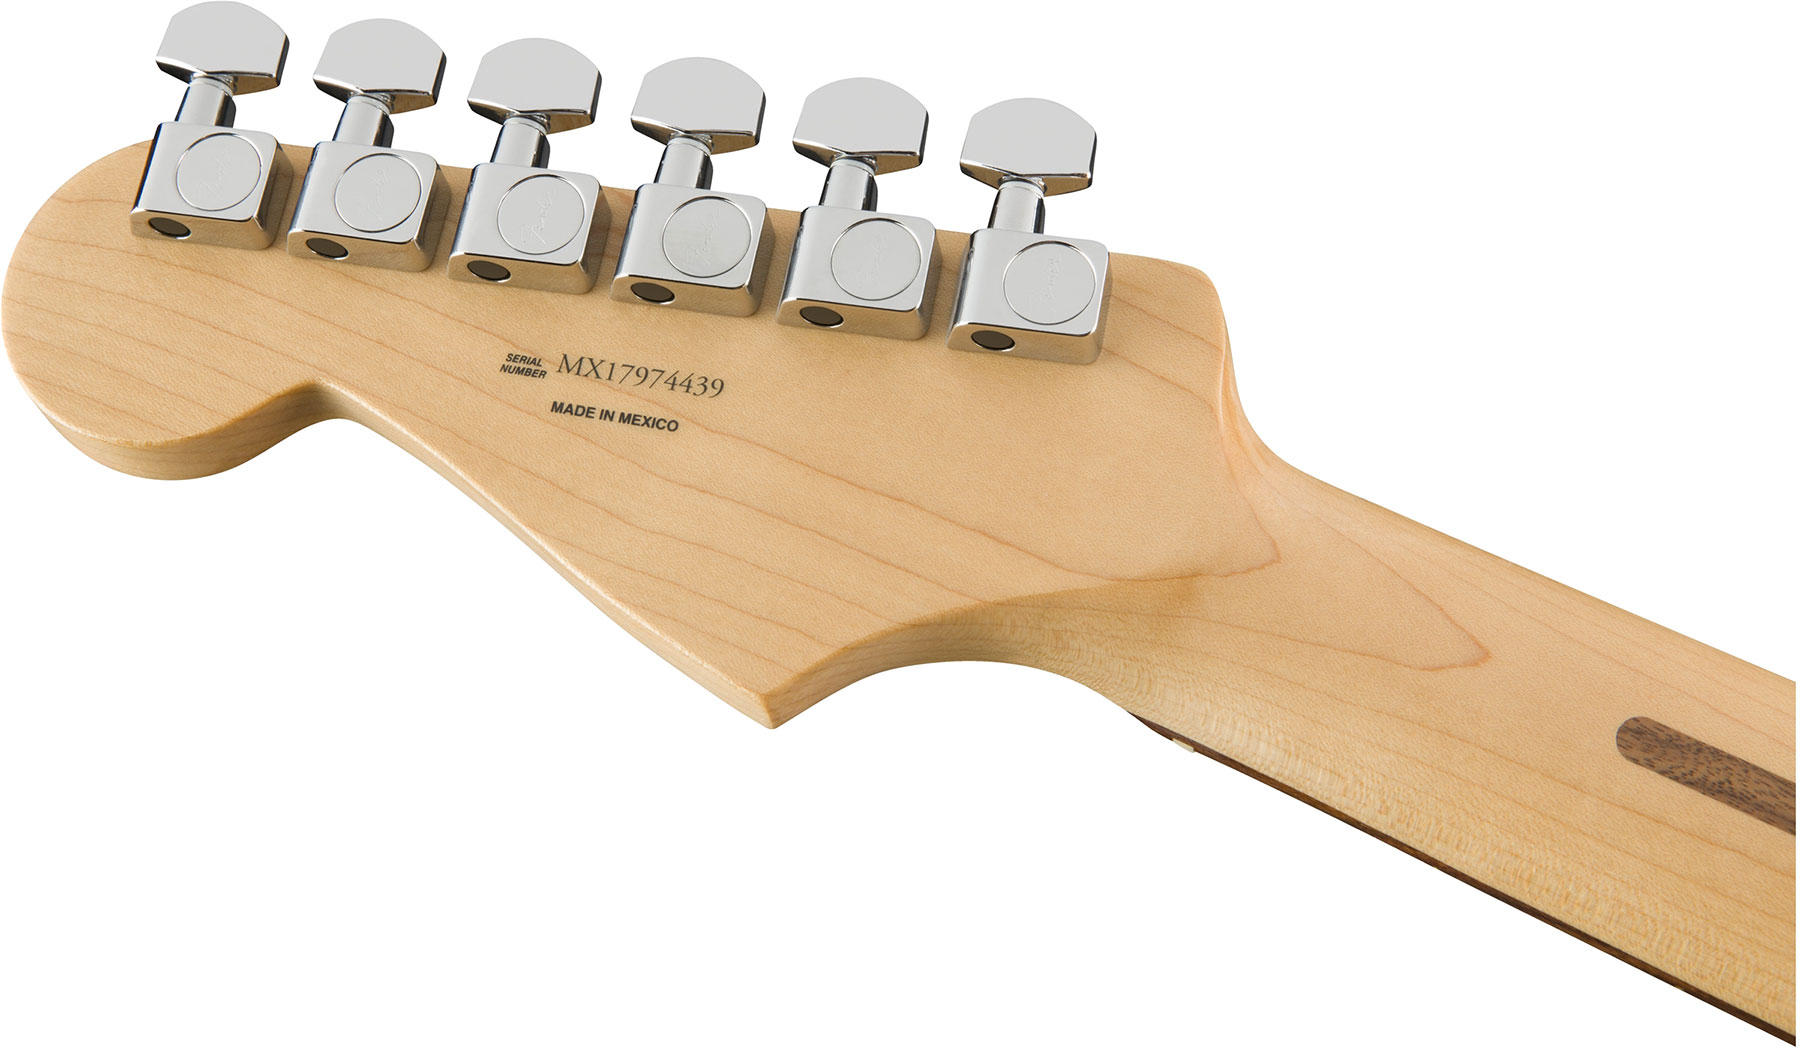 Fender Strat Player Mex Hss Pf - Black - Str shape electric guitar - Variation 4